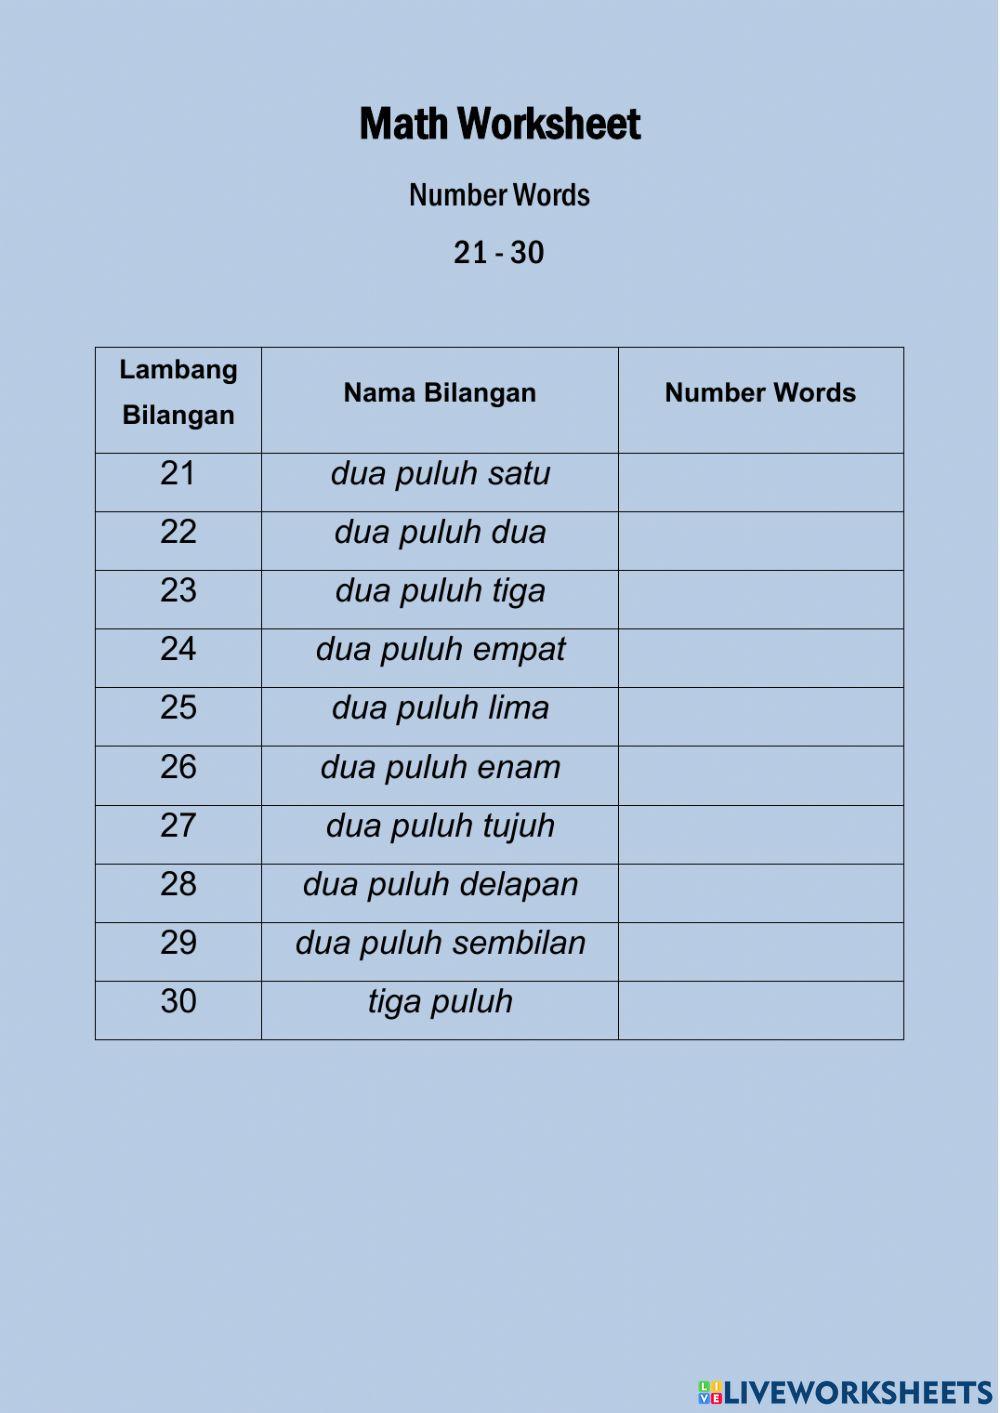 Number Words (21-30)